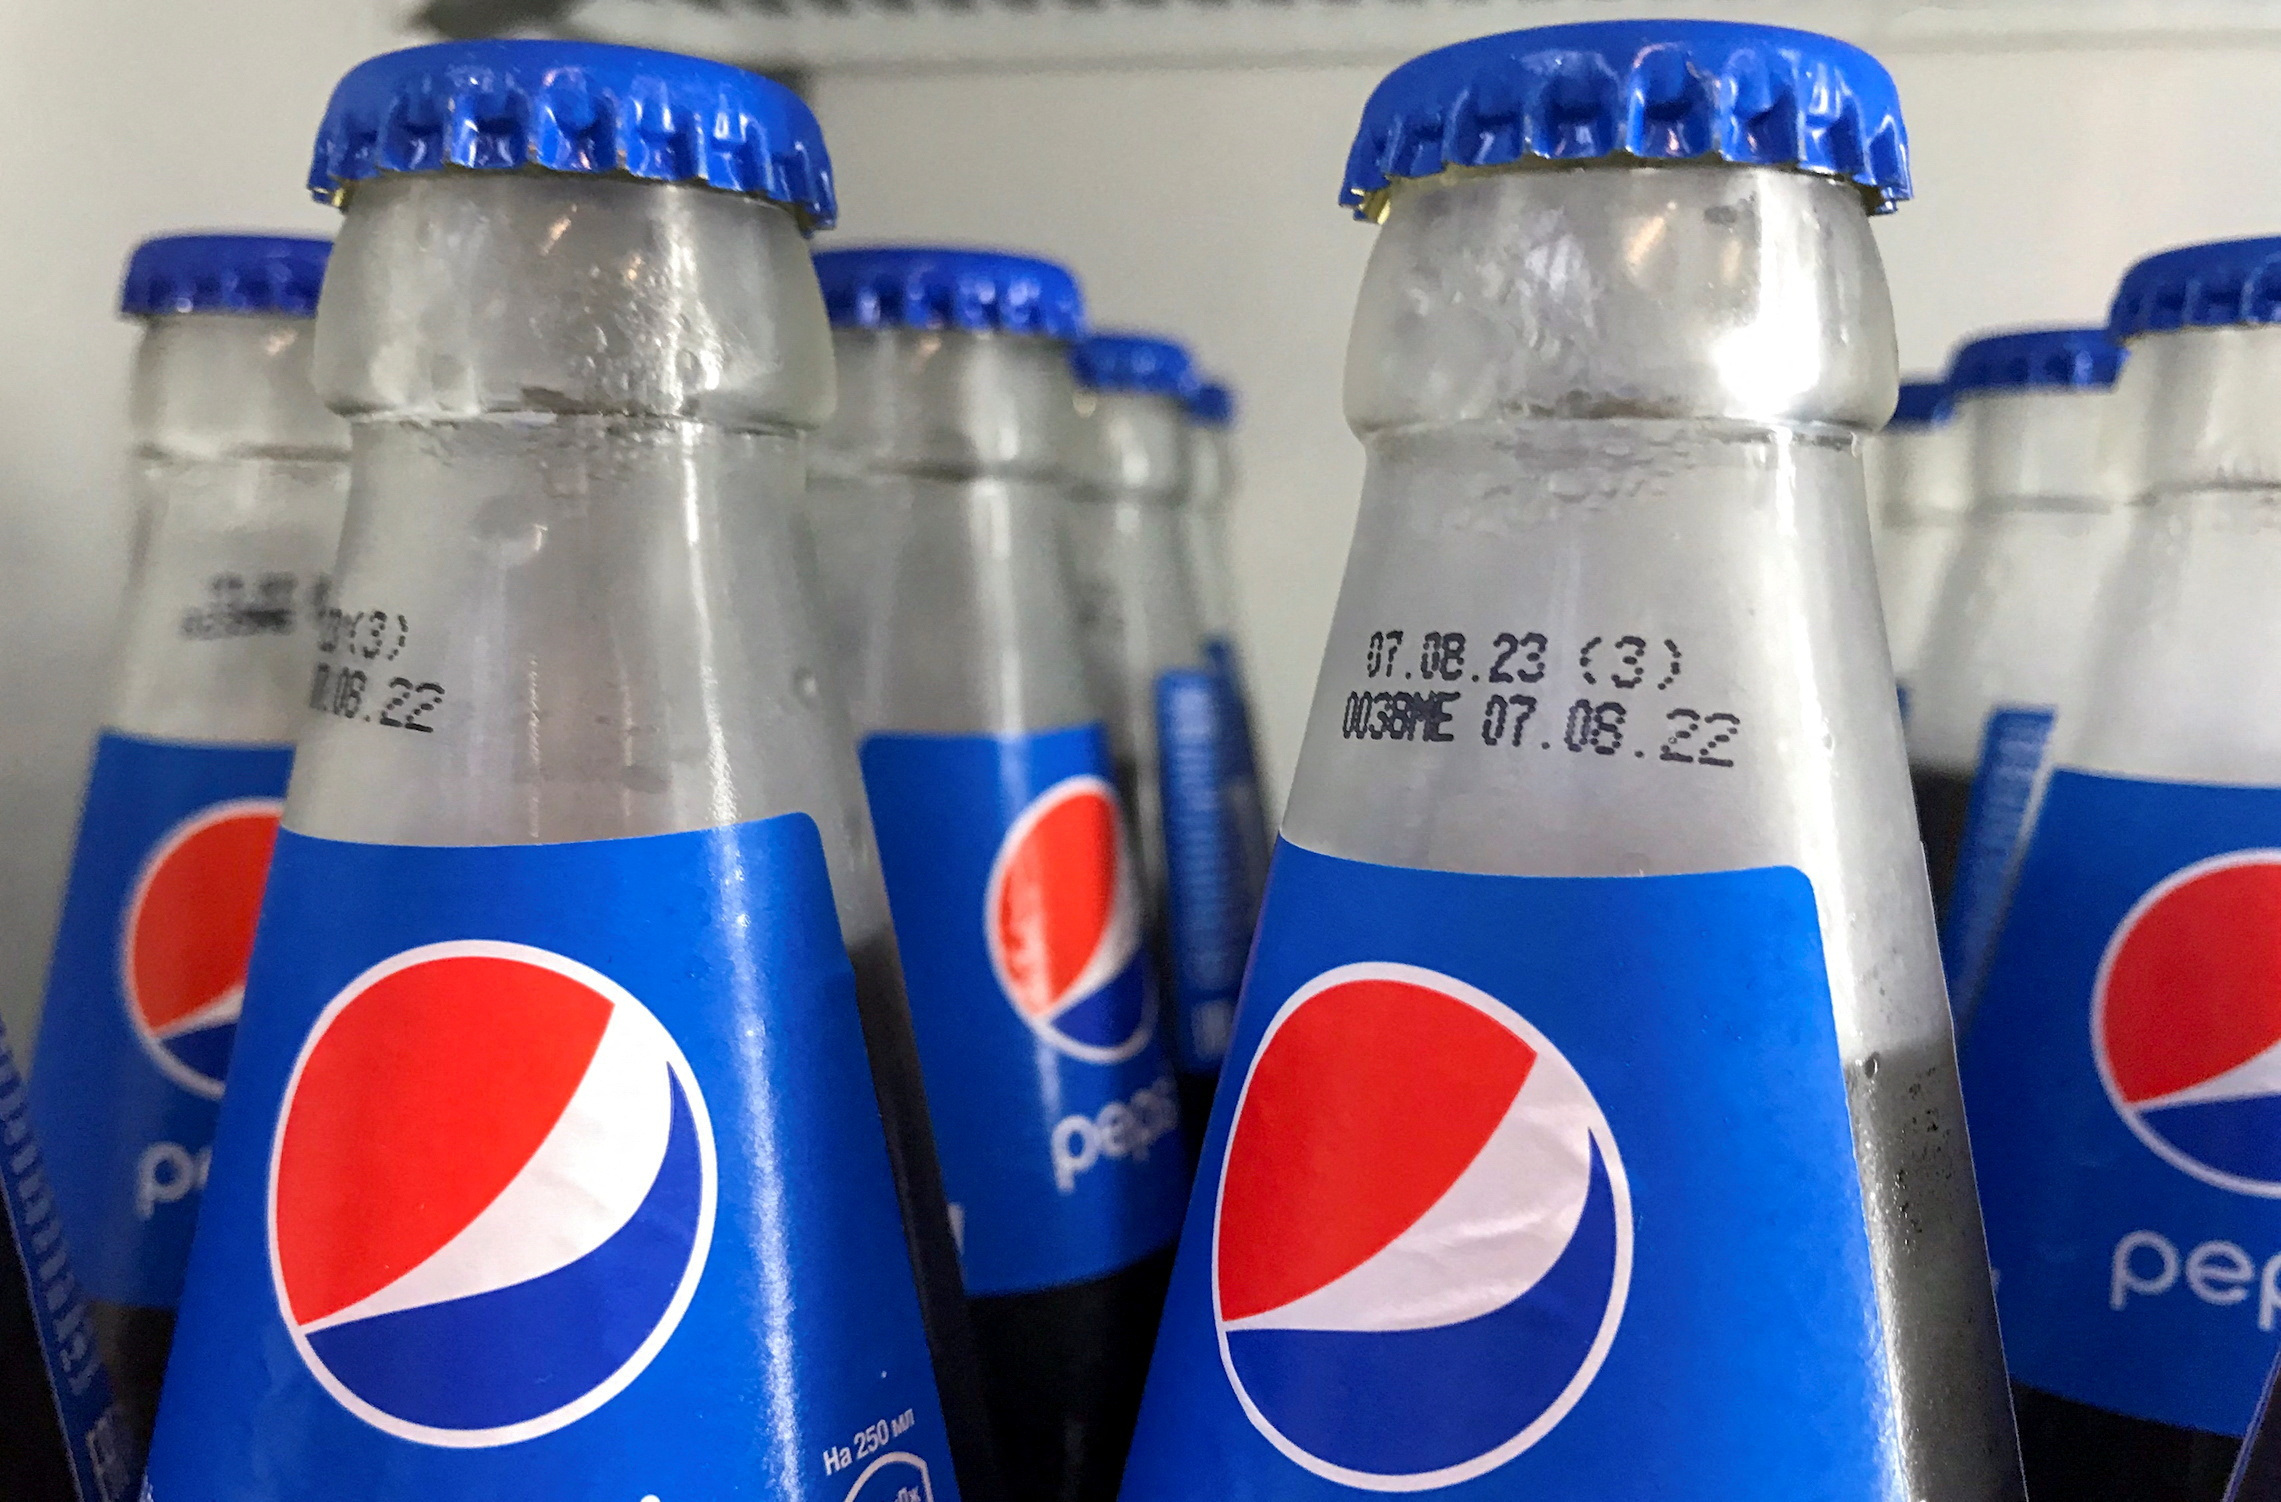 sweeteners no to to | as plans has it set says change Reuters its warn portfolio aspartame on PepsiCo WHO